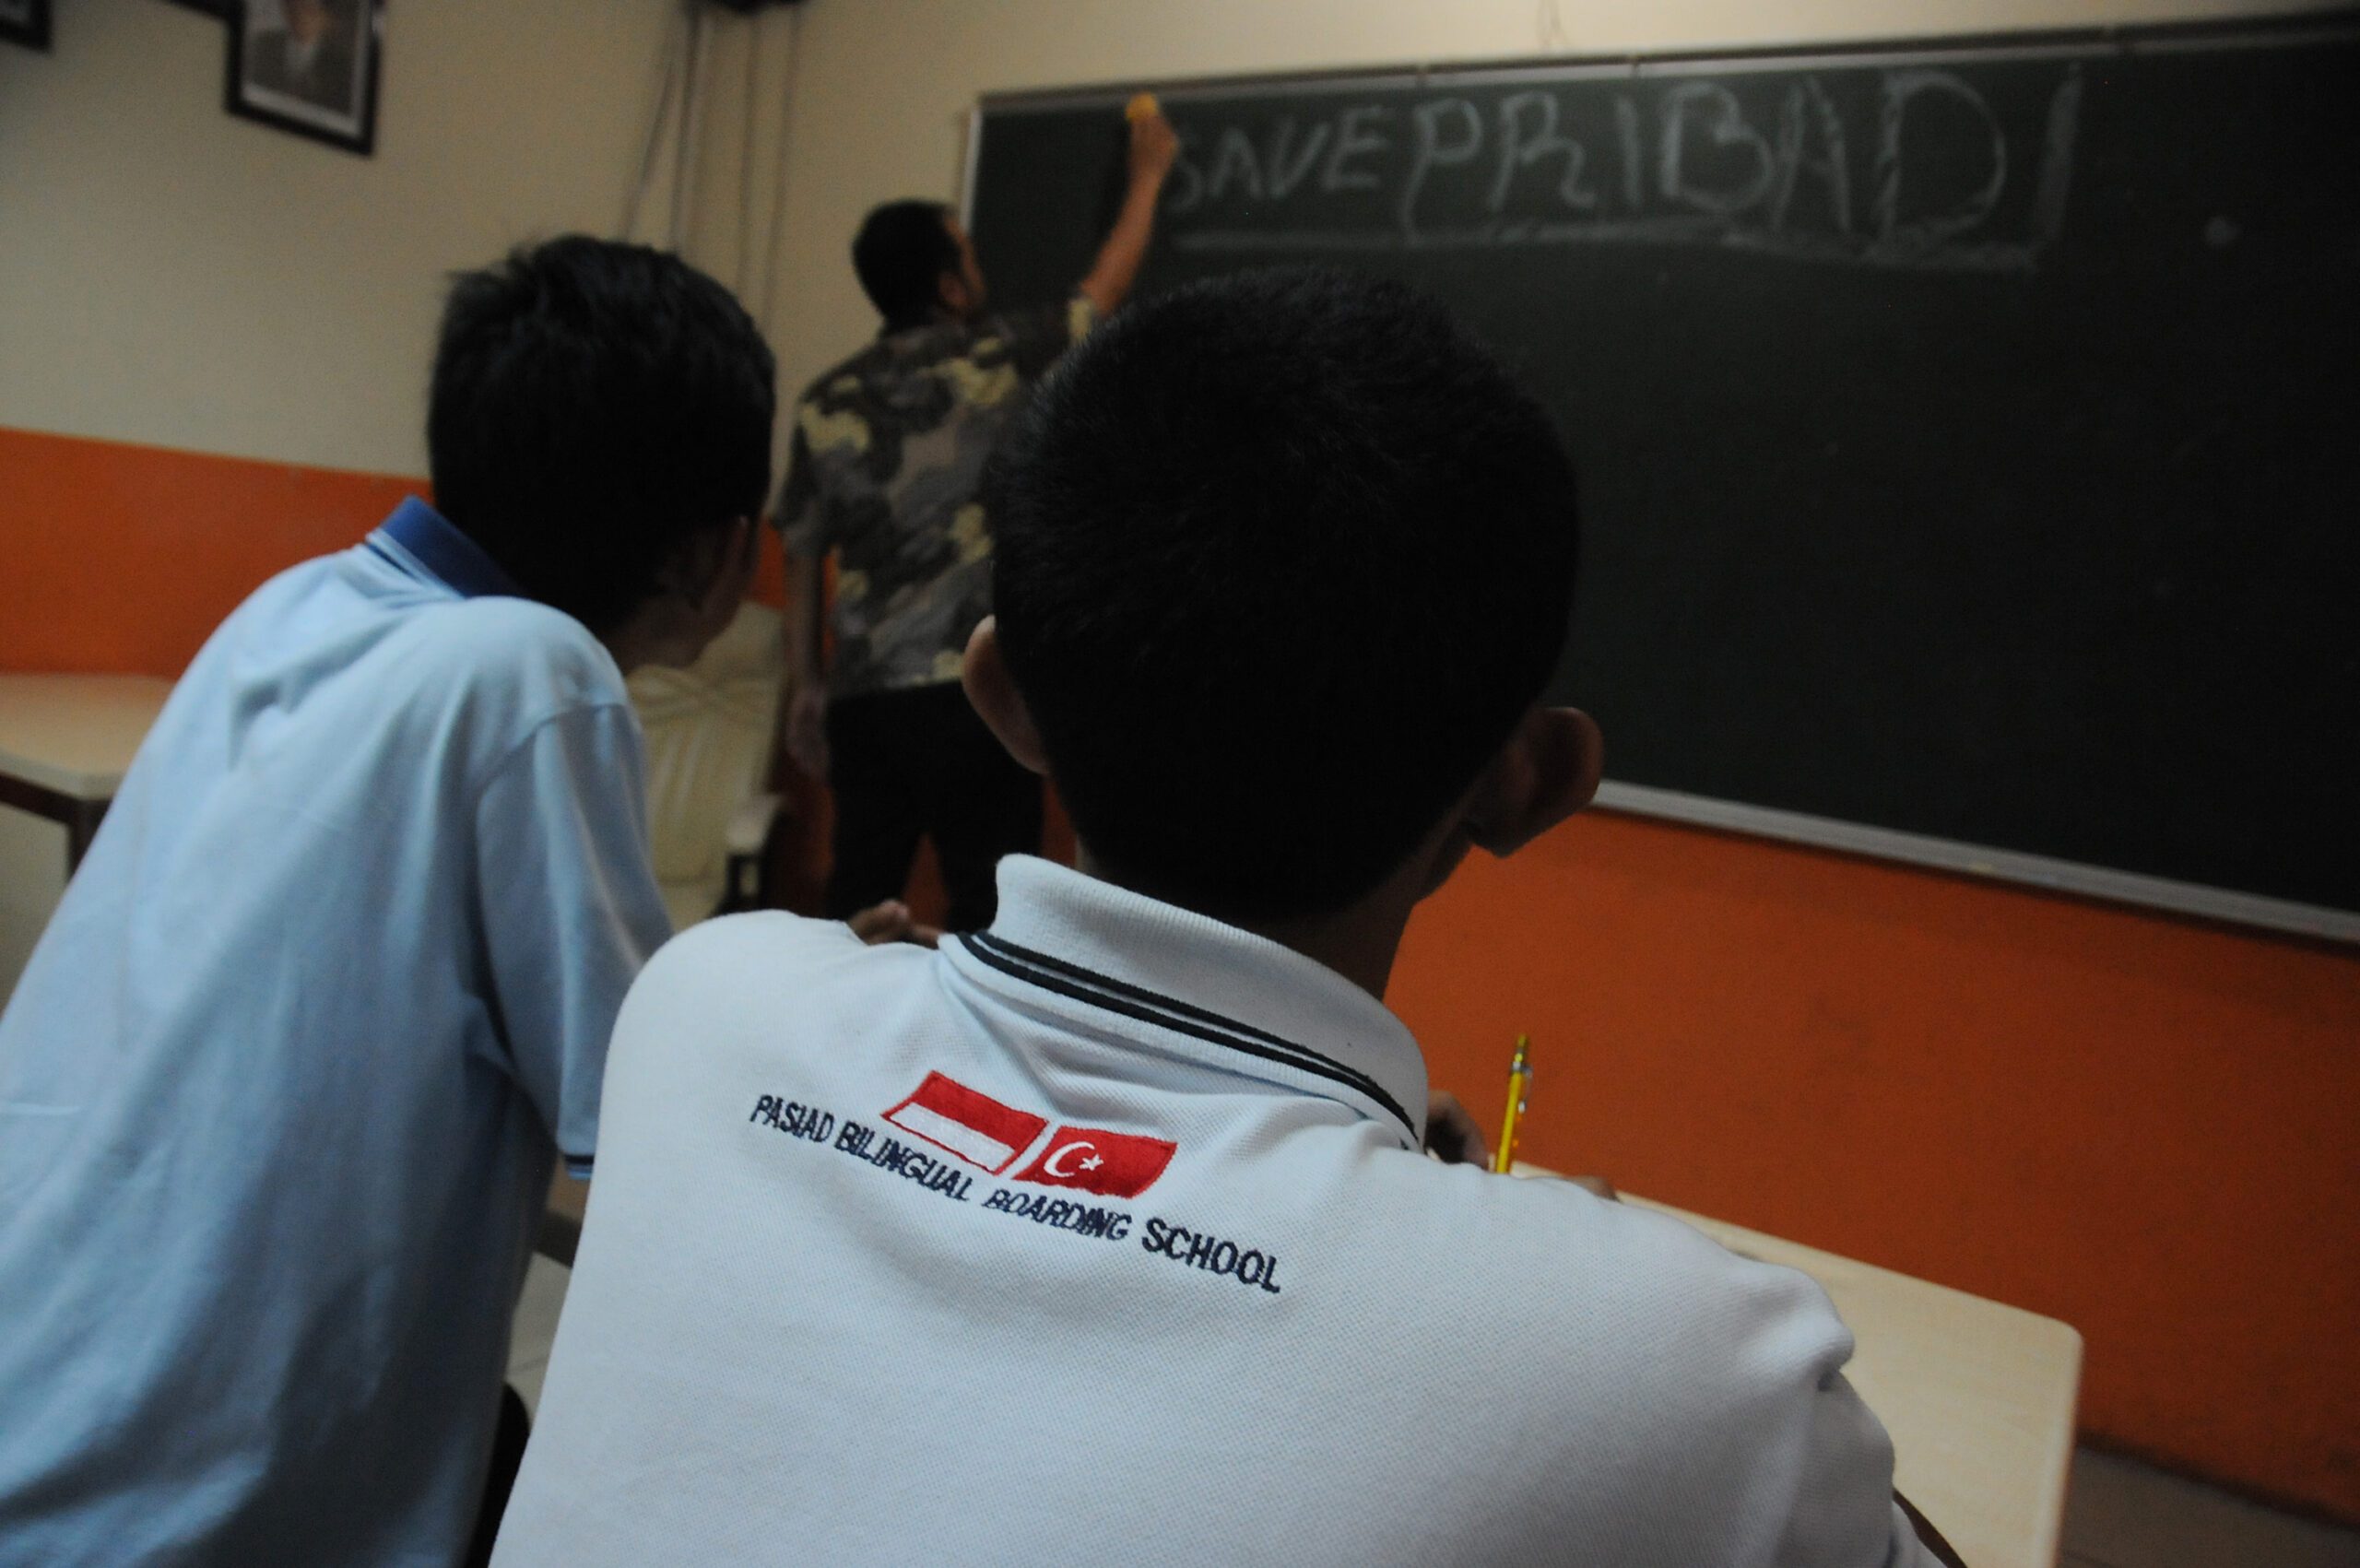 Pribadi School Bandung bantah terkait organisasi teroris Turki